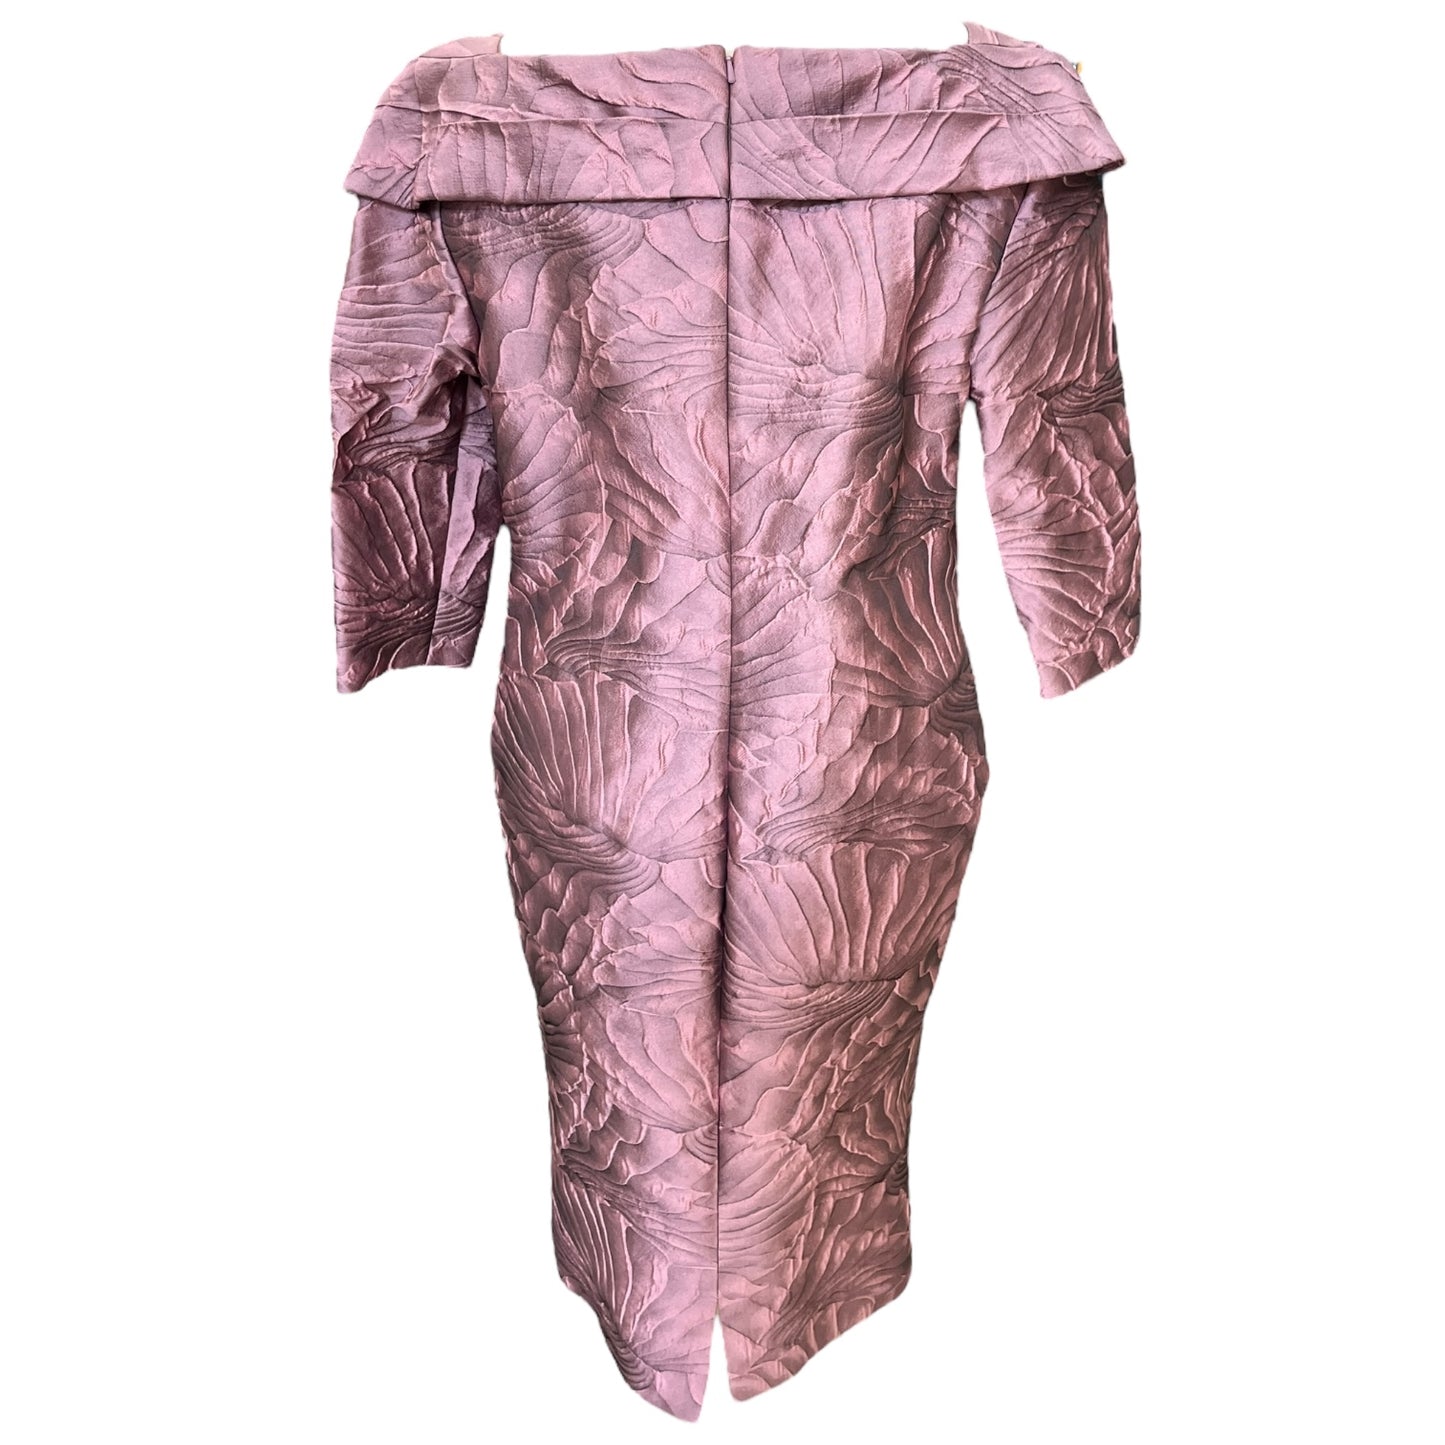 Dress Code by Veromia Pink Dress - 14